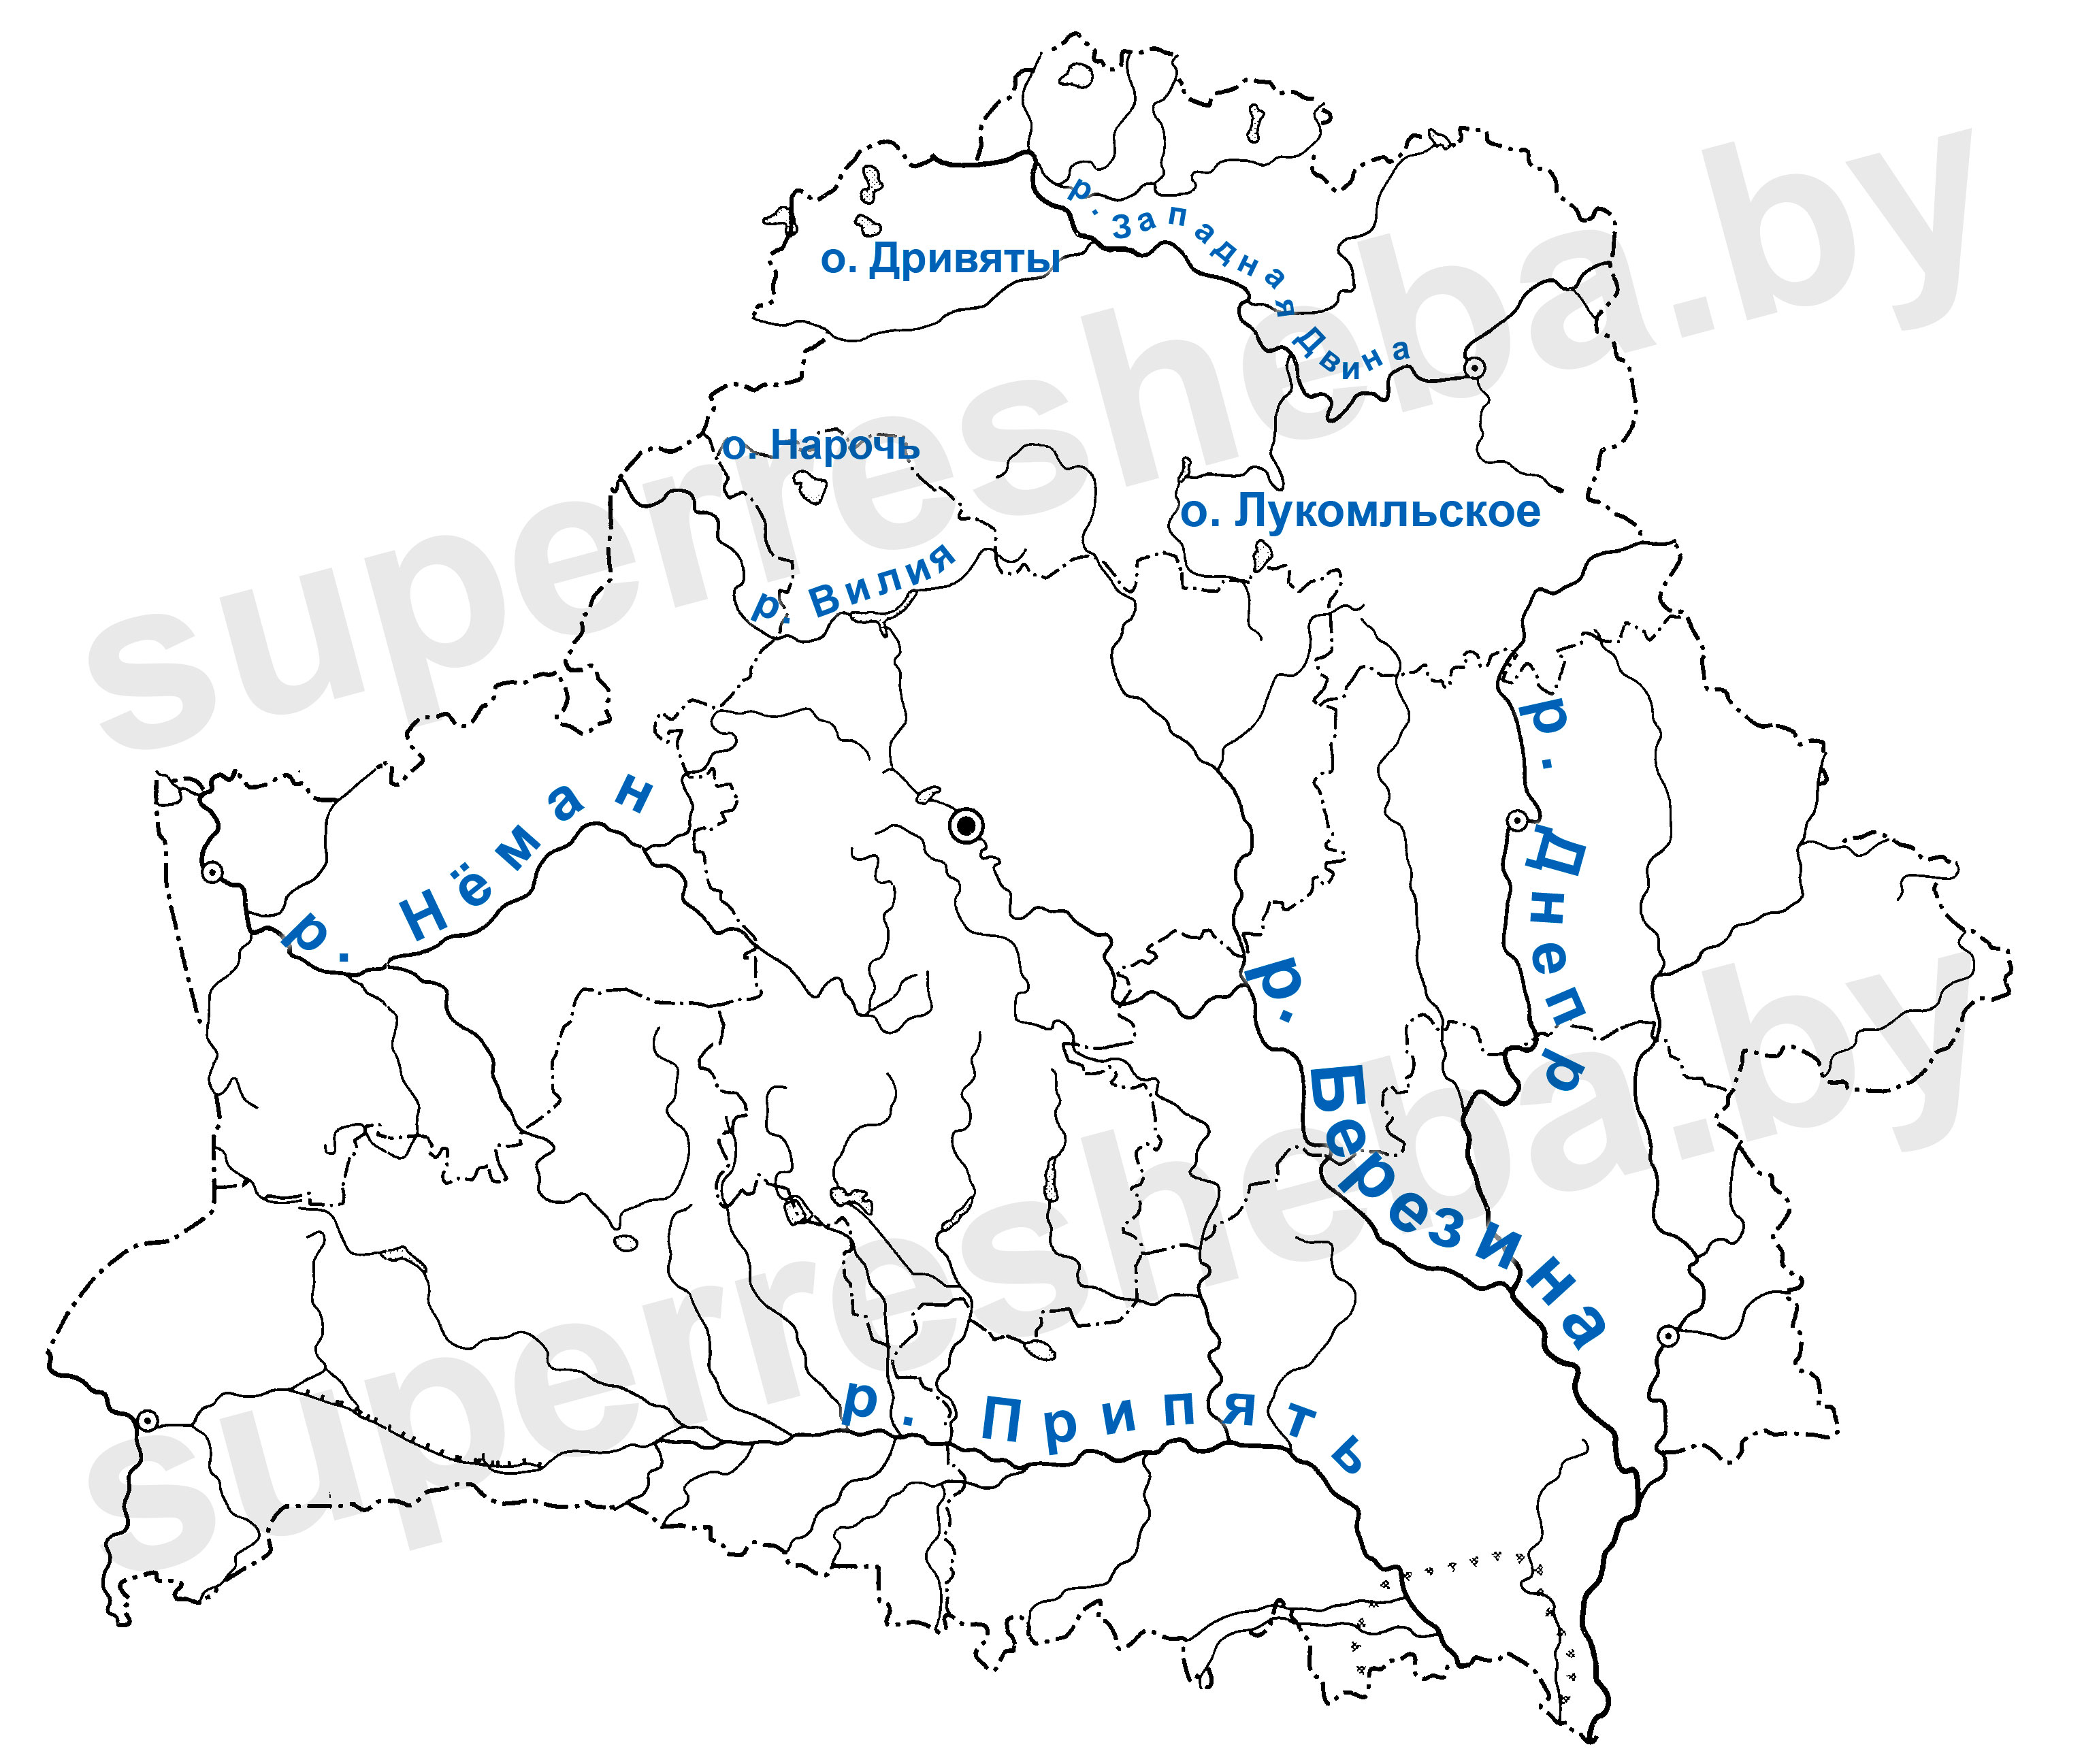 Карта рек белоруссии